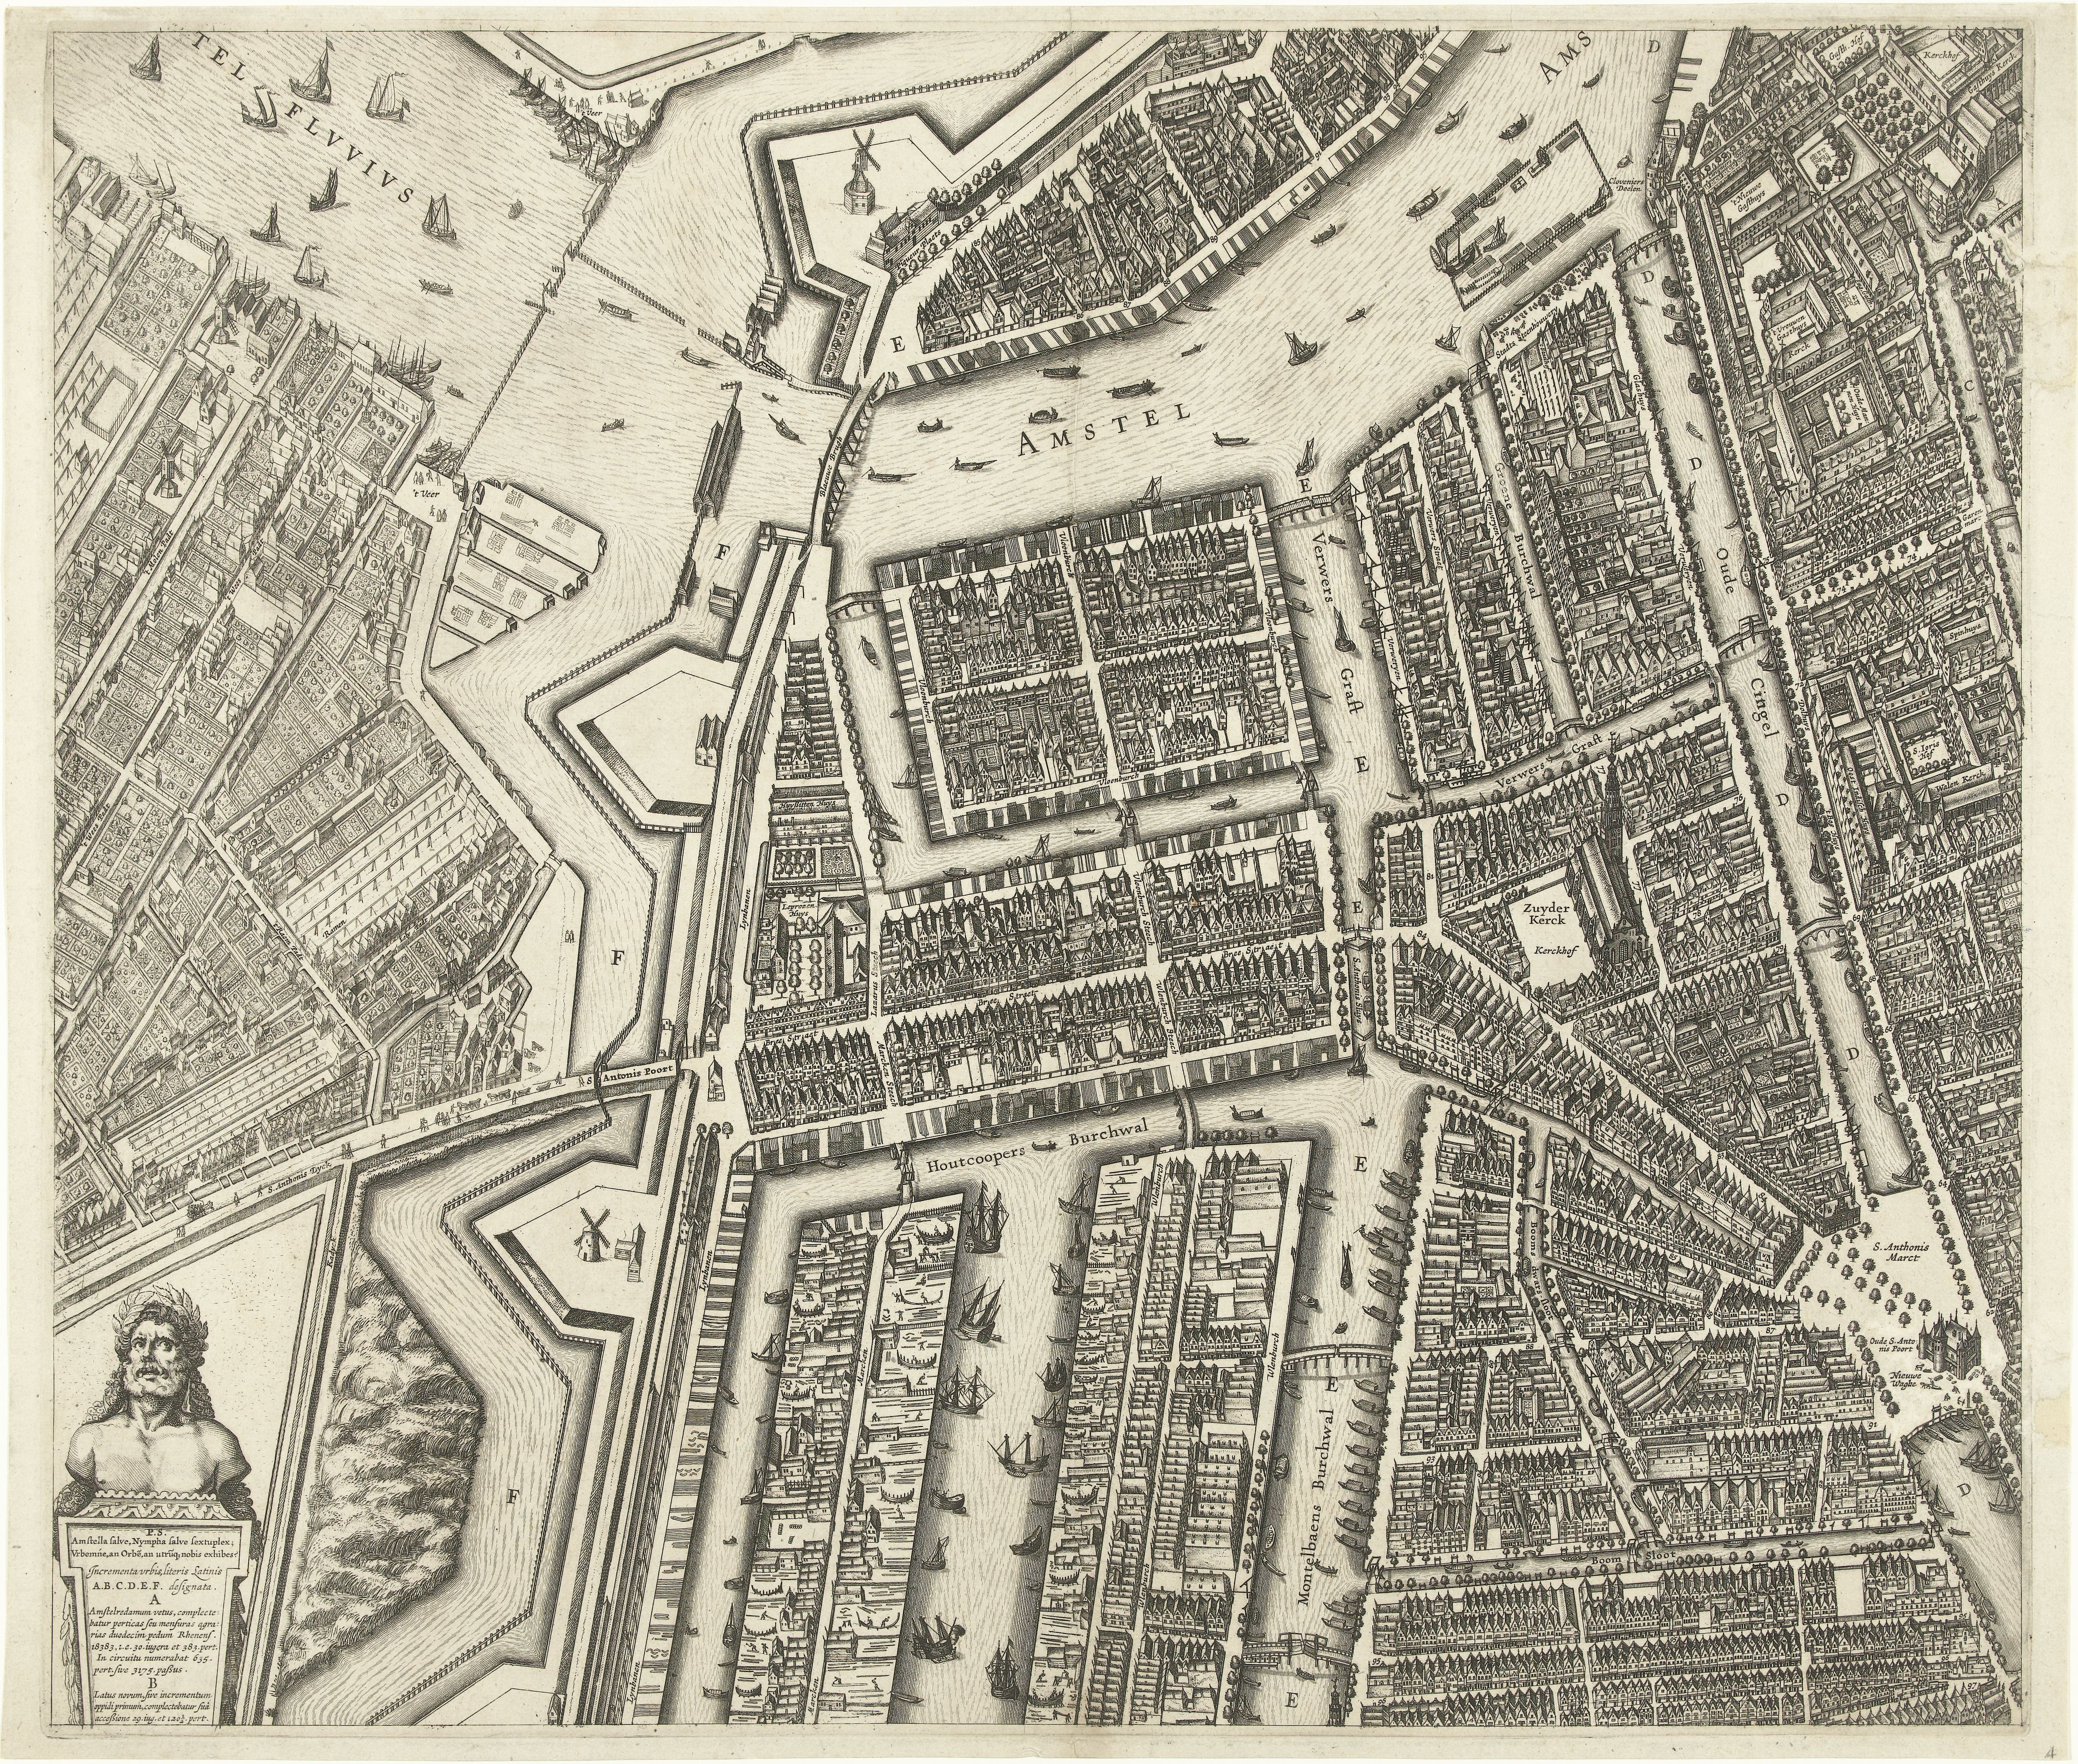 Map Amsterdam